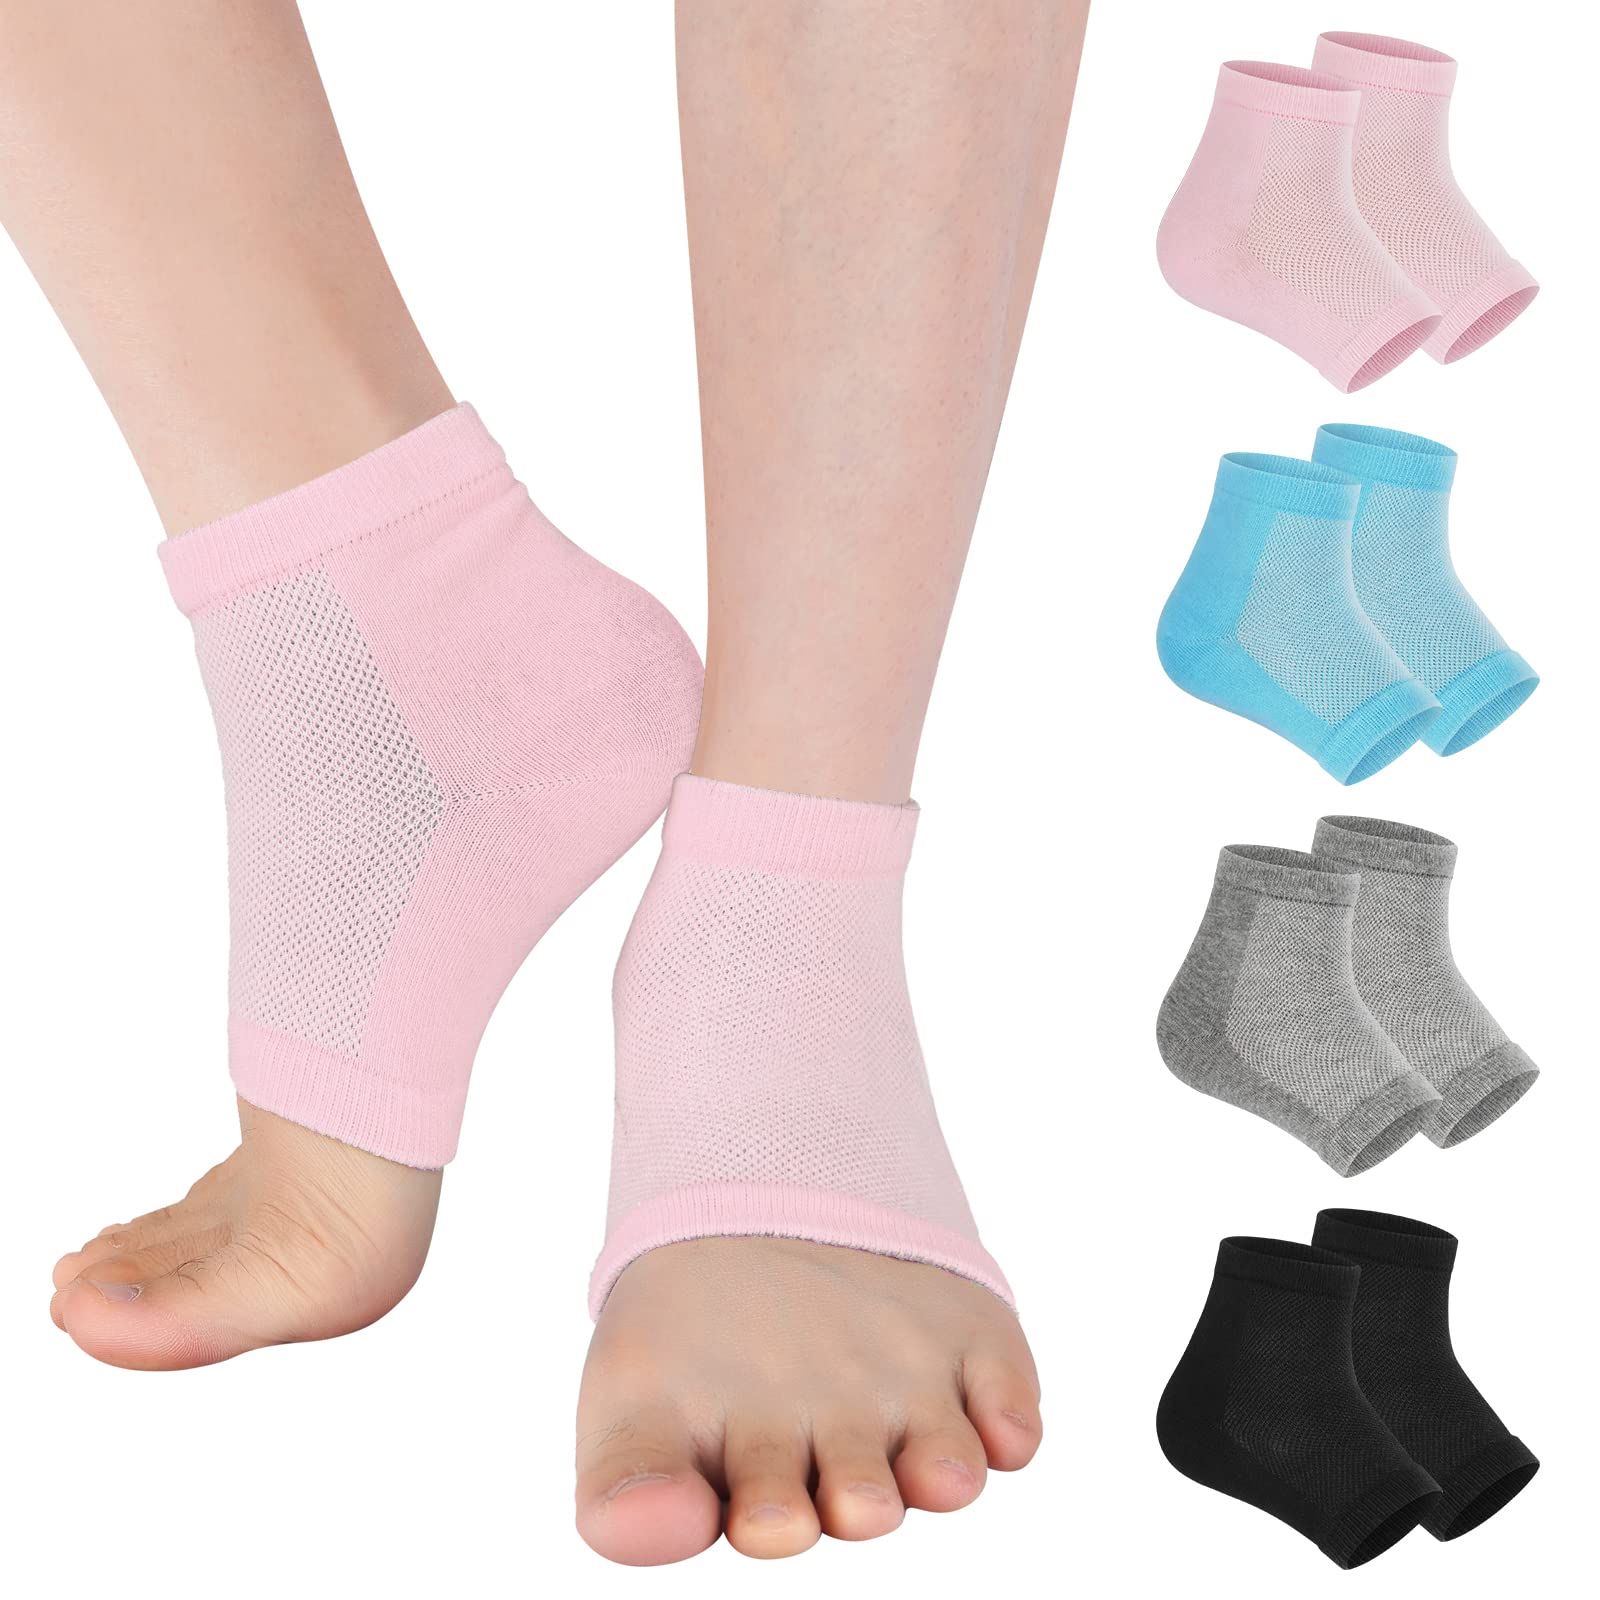 Moisturizing Socks & Gel Socks for Dry Cracked Feet - Foot Care Heel S –  Love, Lori